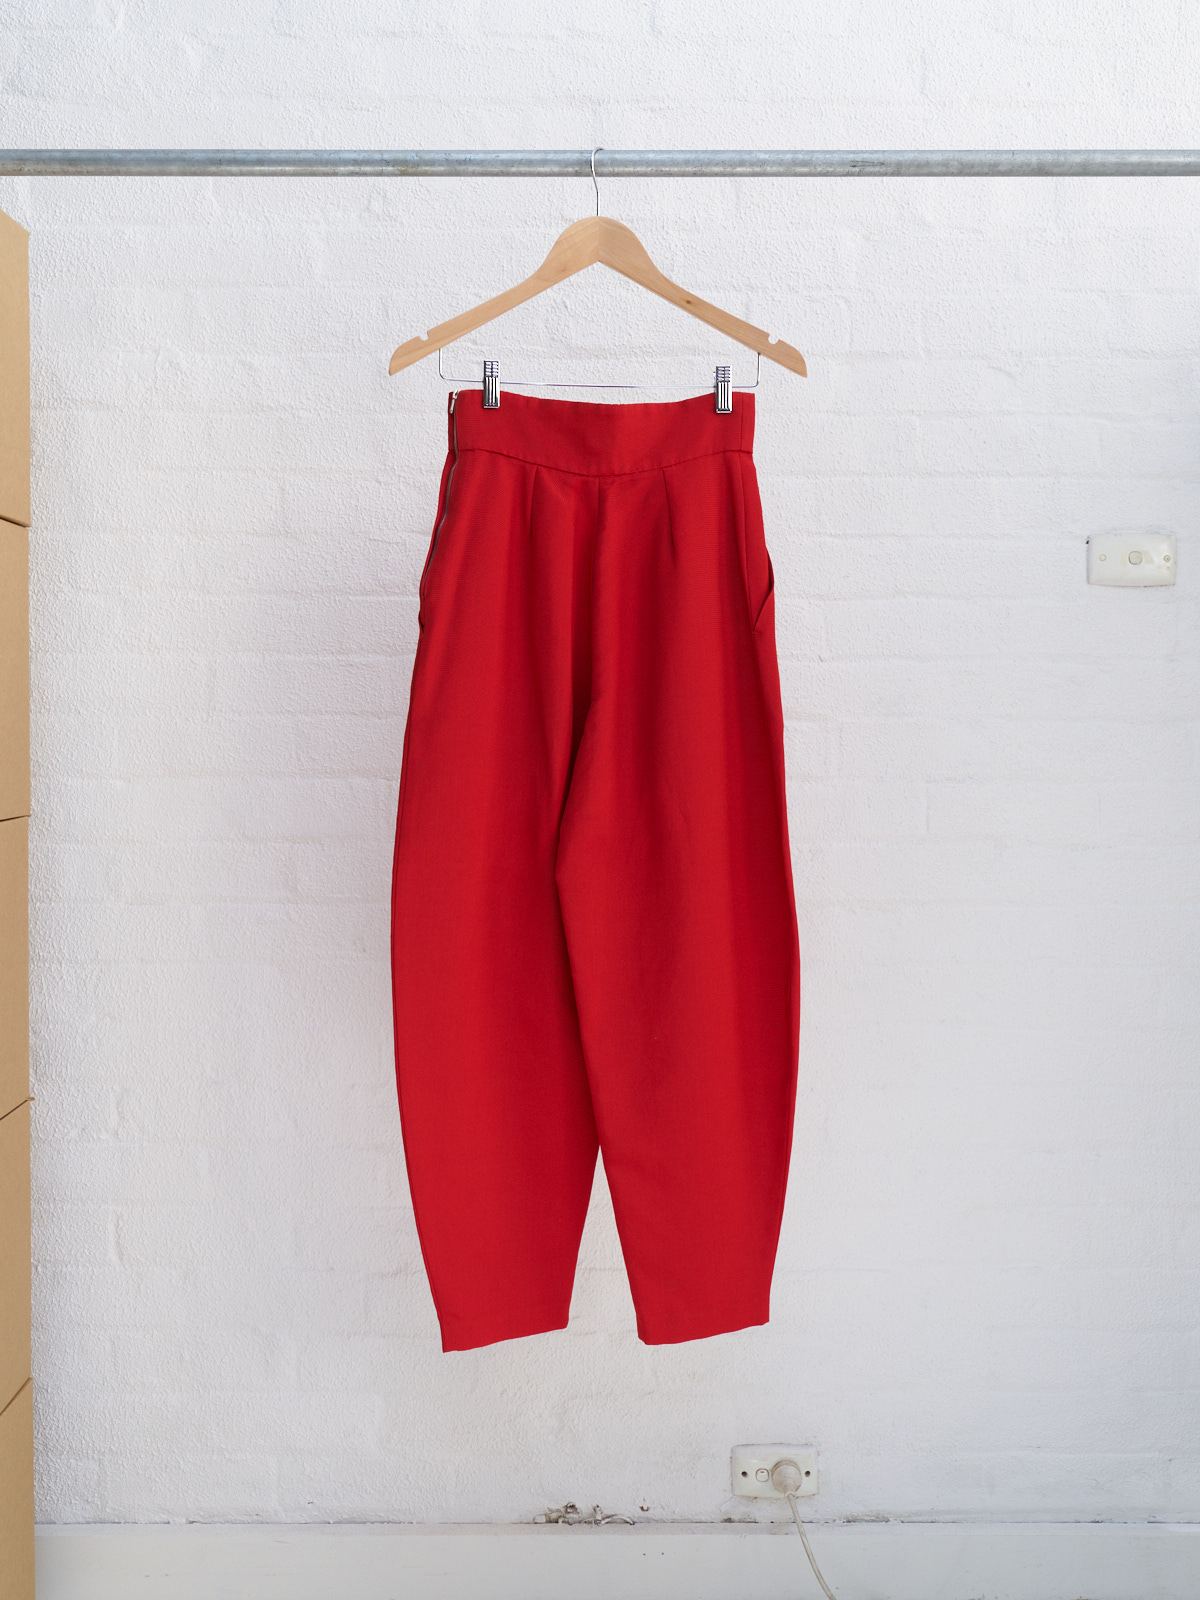 Jasper Conran 1980s red grosgrain tapered balloon trousers - womens 10 8